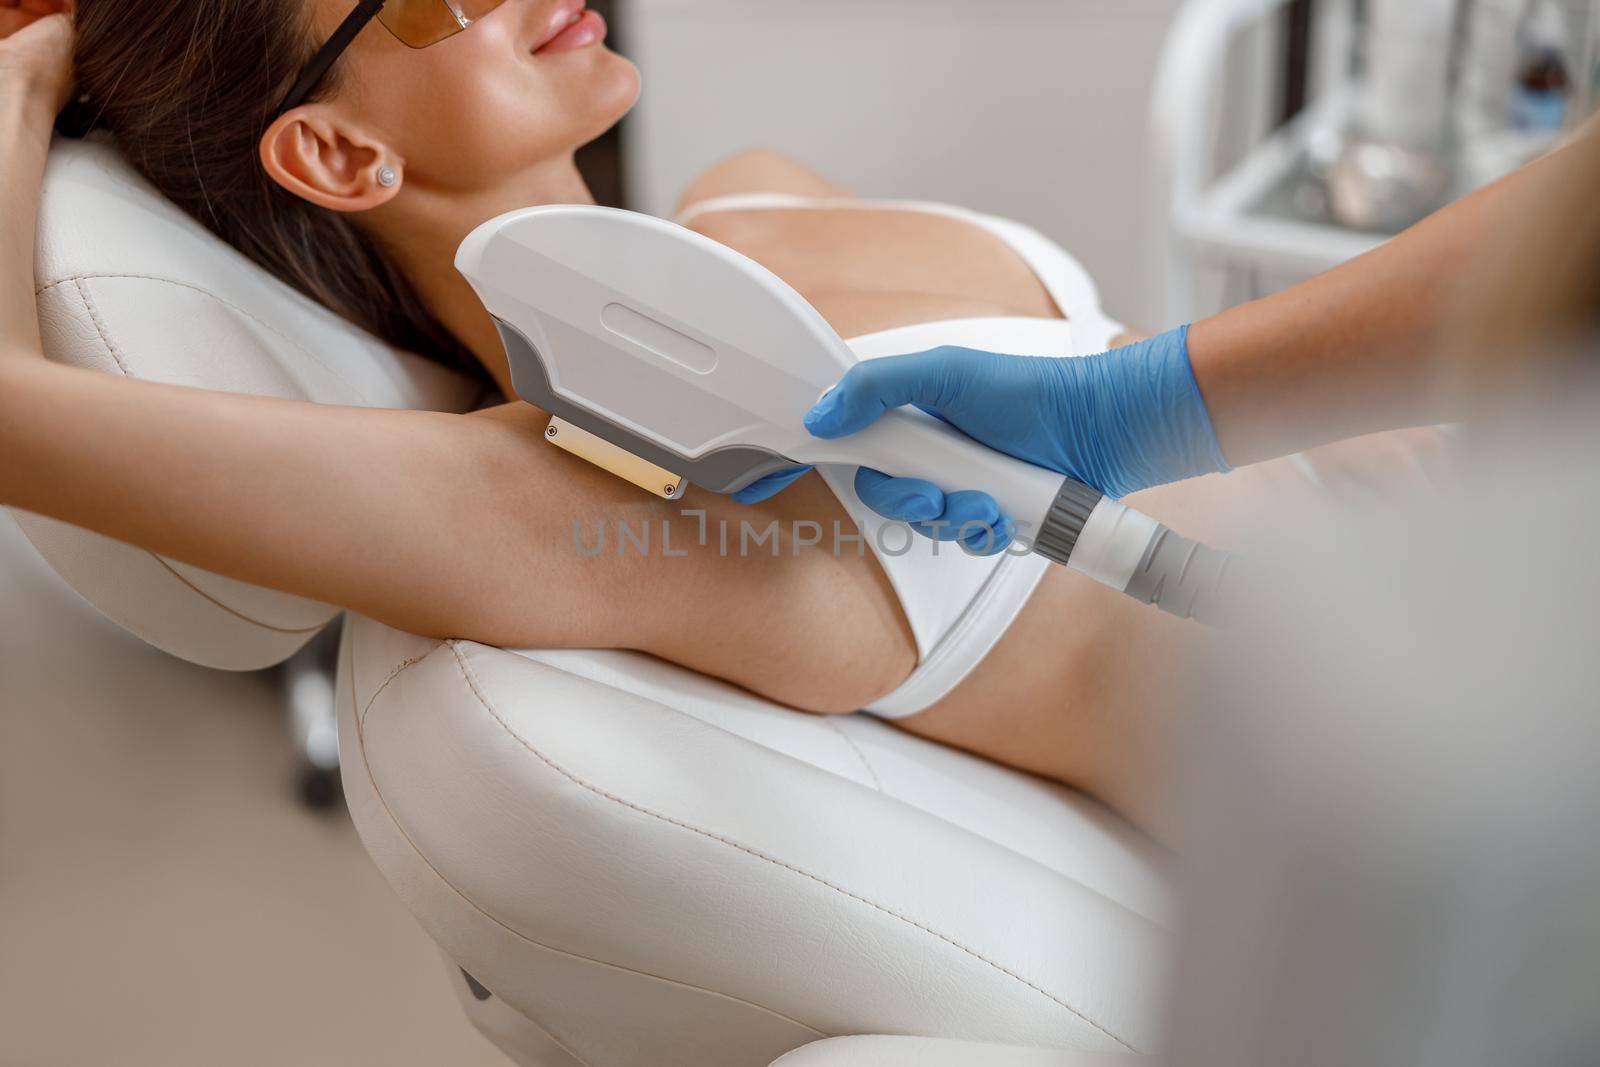 Armpit hair photo epilation procedure with ipl machine in a beauty salon. Cosmetology